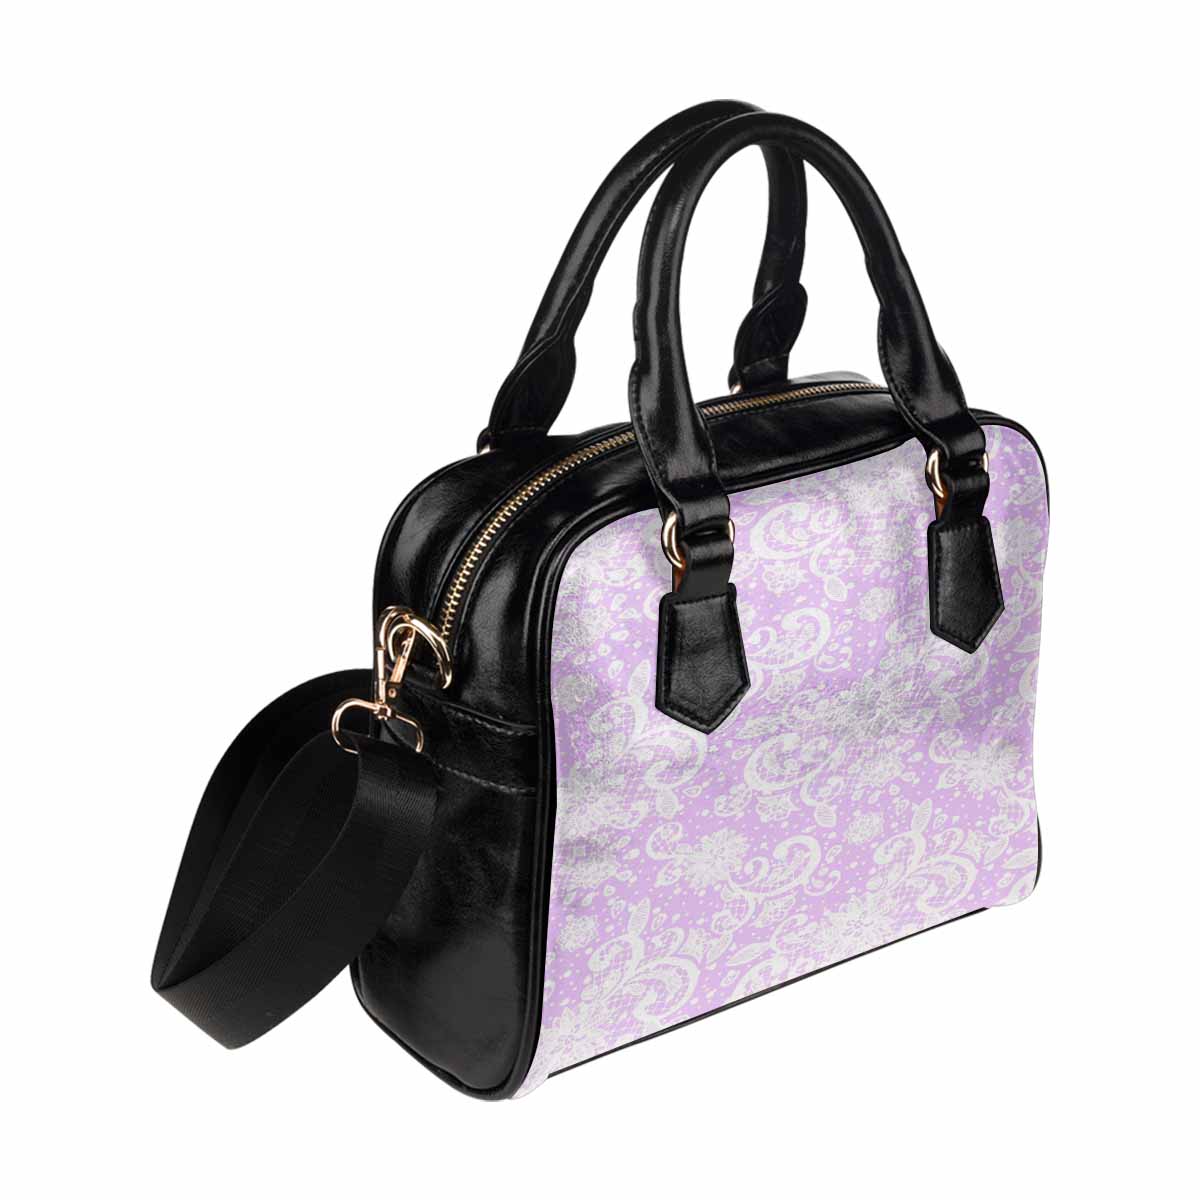 Victorian lace print, cute handbag, Mod 19163453, design 06